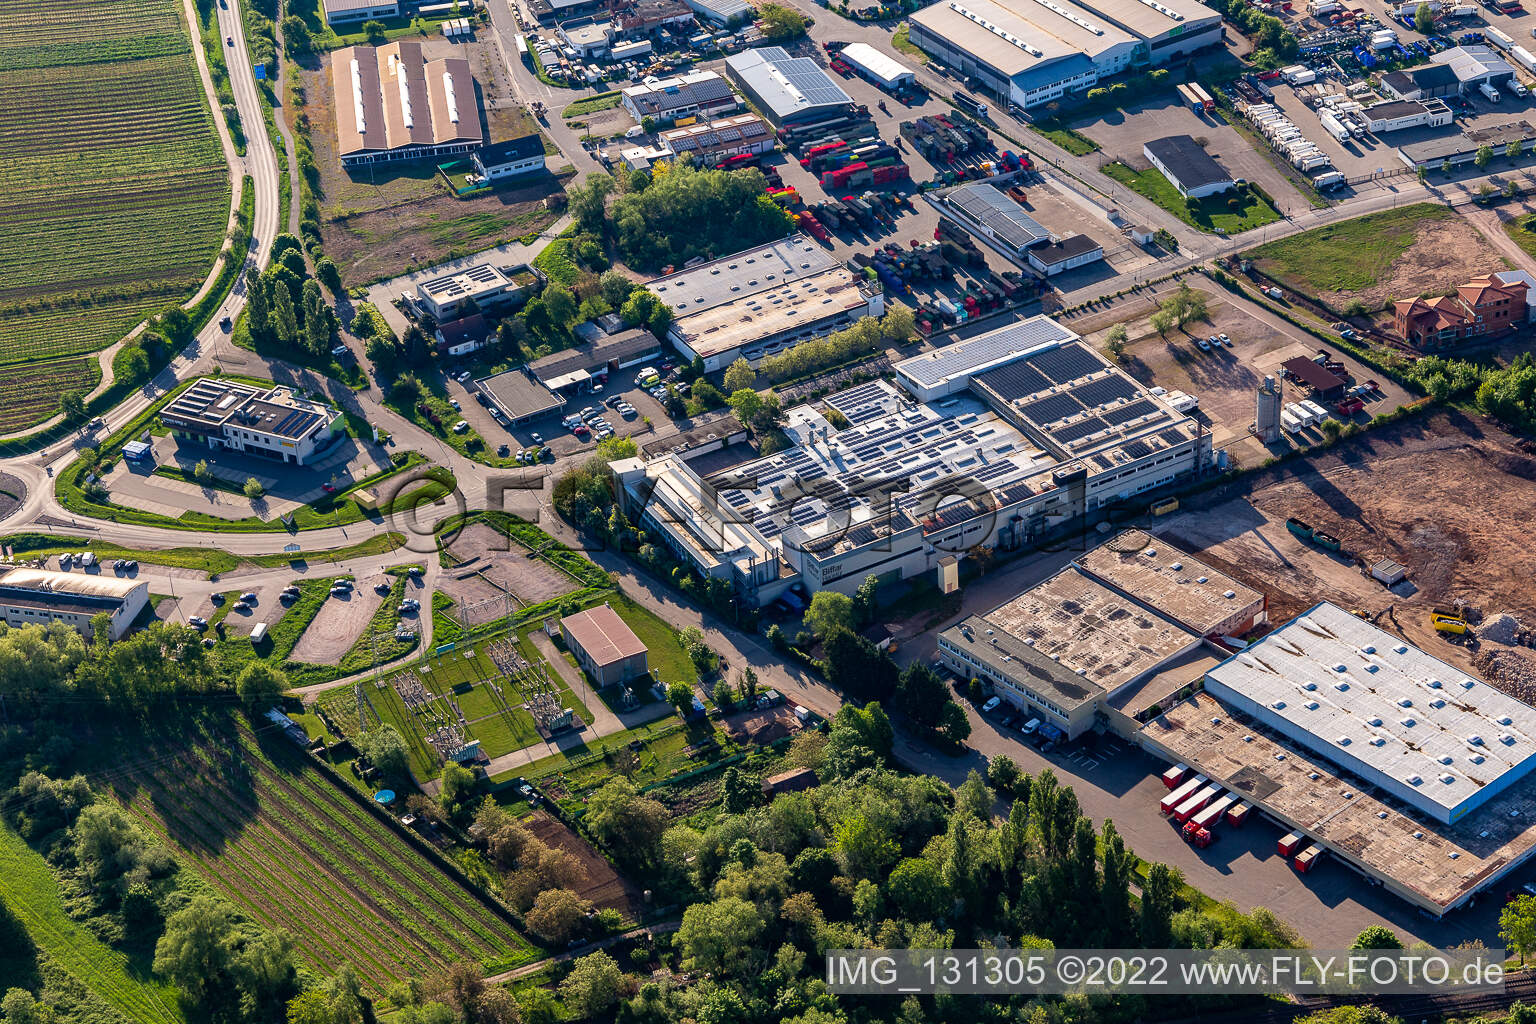 Aerial photograpy of Biffar GmbH & Co. KG in Edenkoben in the state Rhineland-Palatinate, Germany